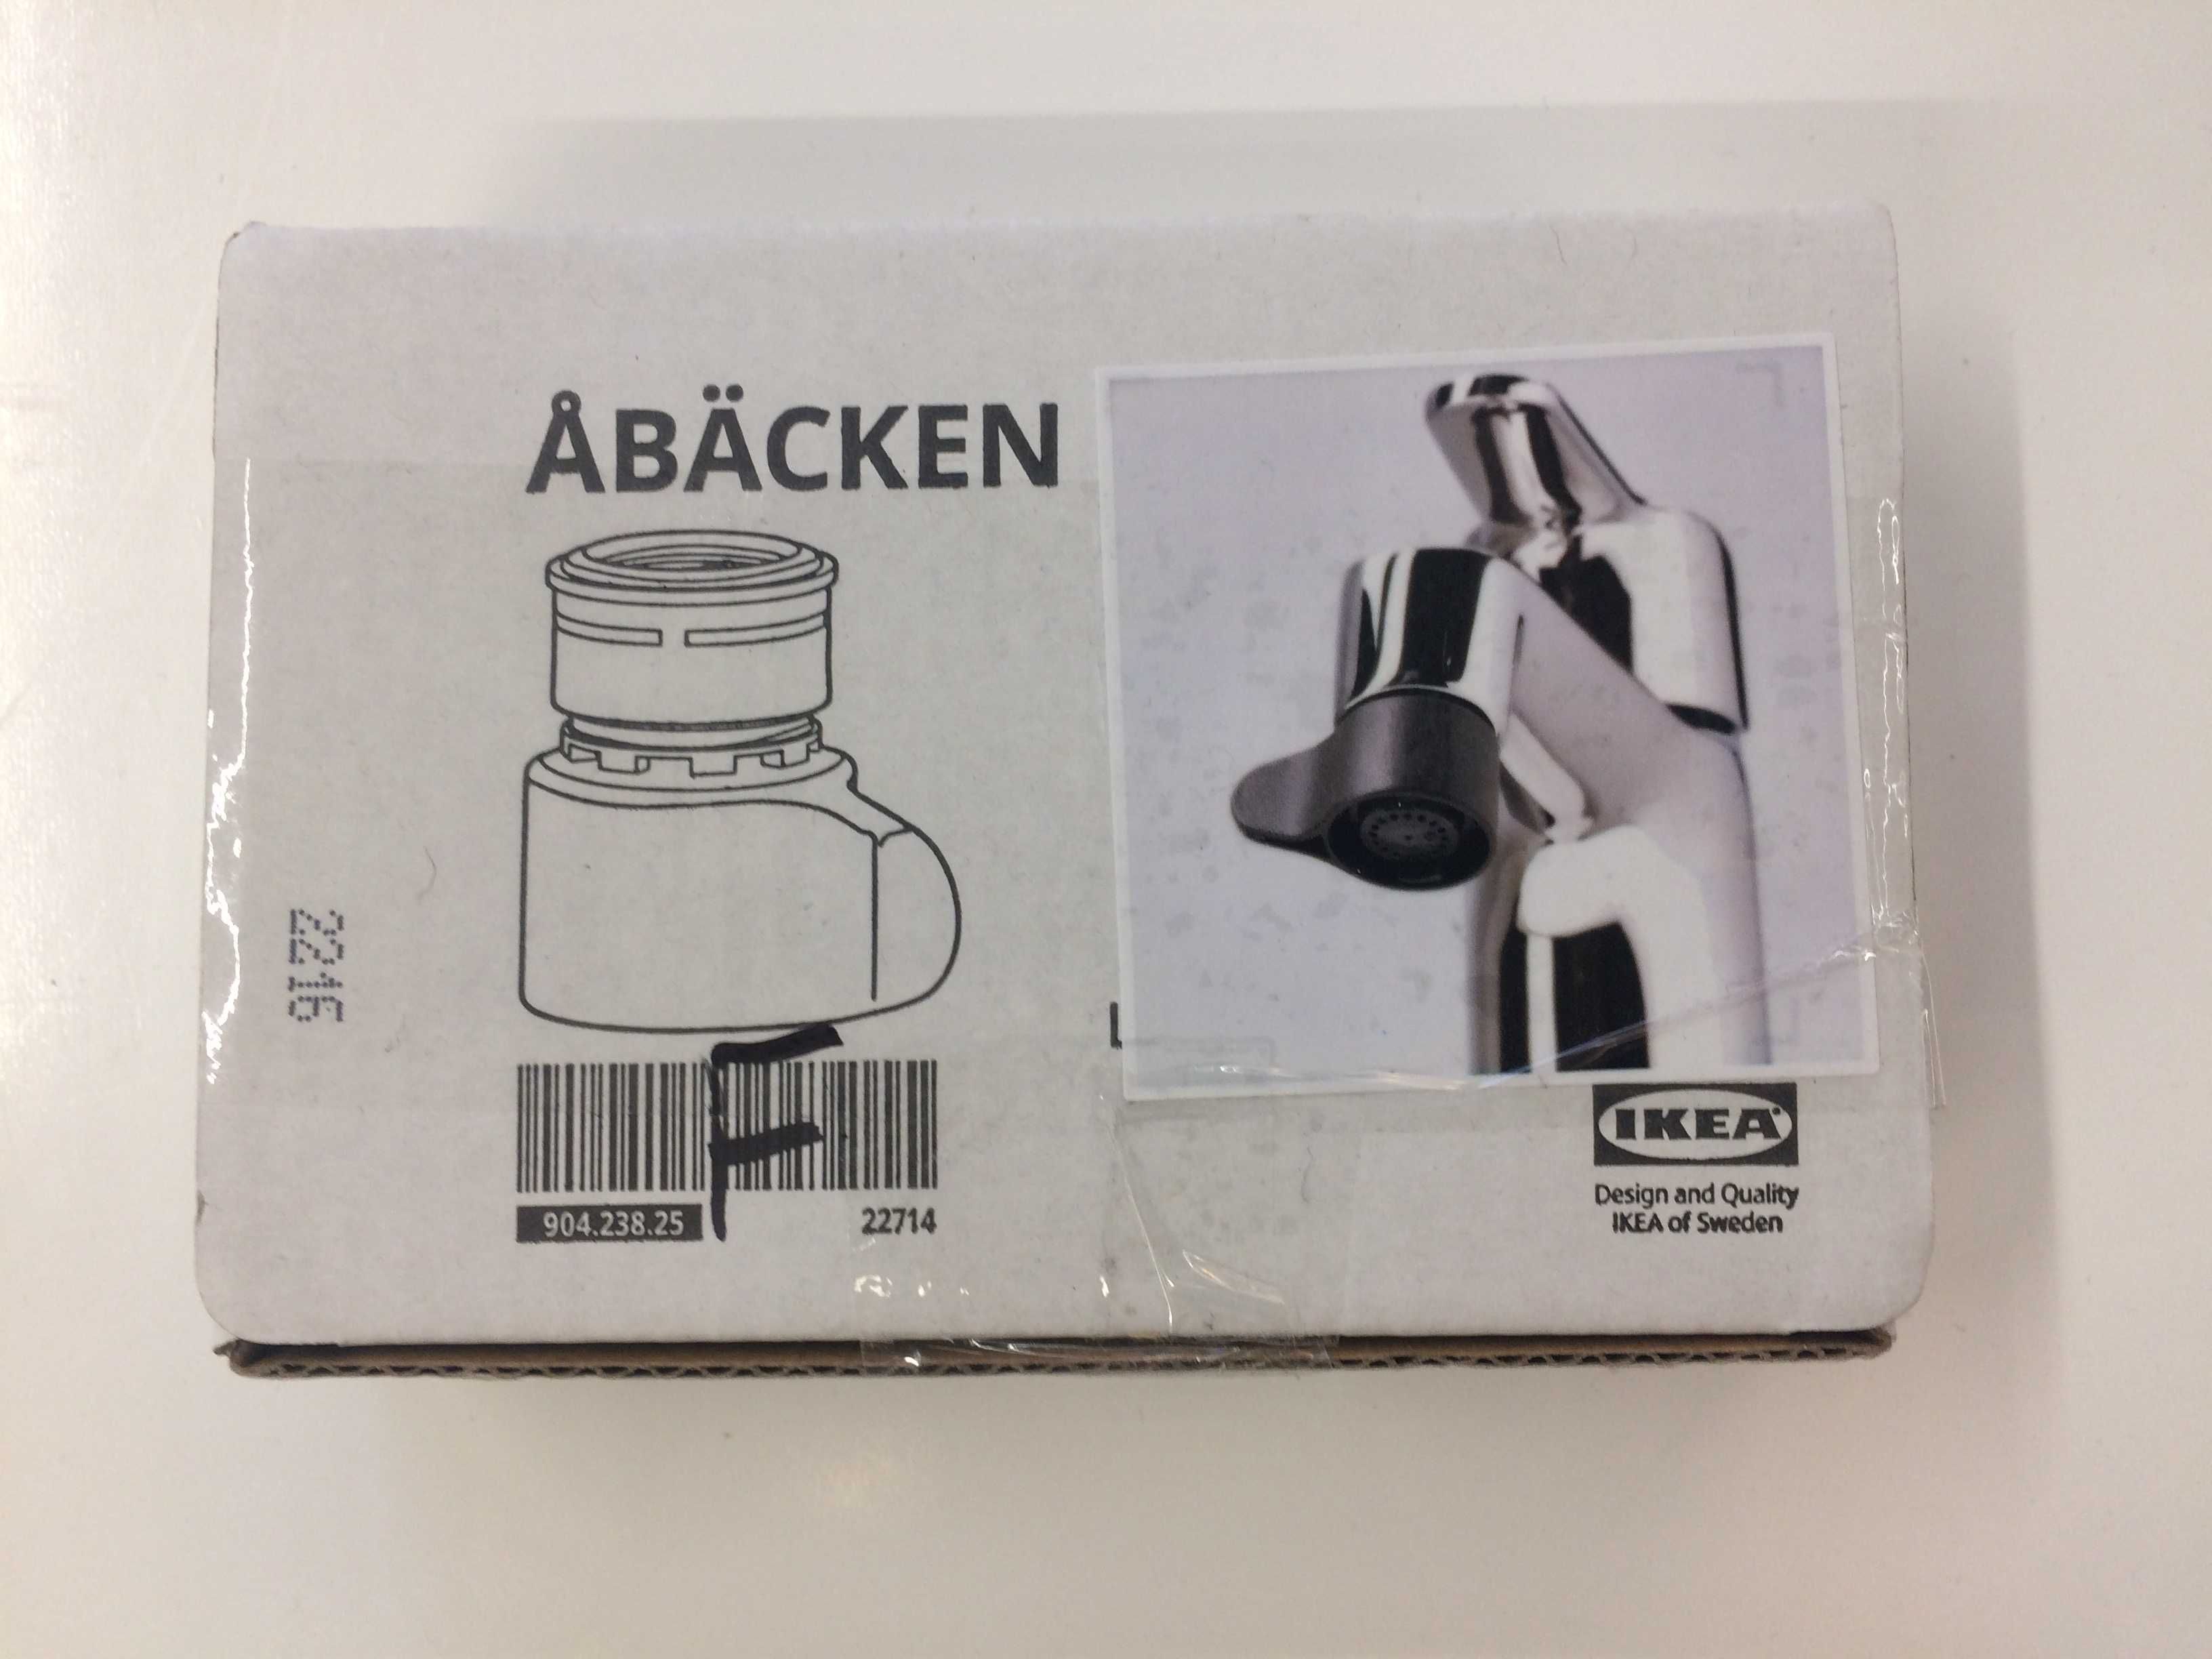 ABACKEN dysza mgłowa (perlator) z IKEA, NOWY, negocjuj